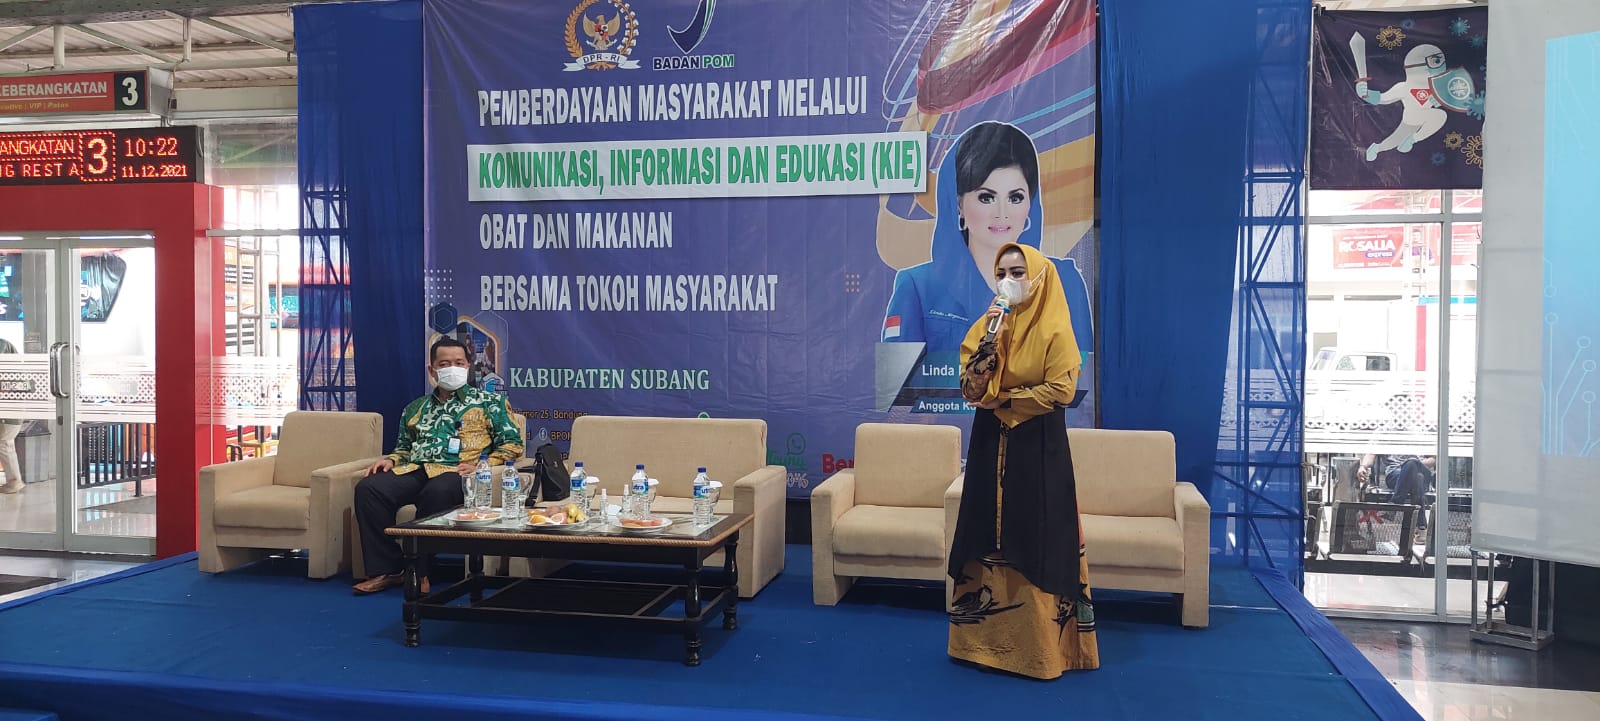 Linda Megawati: Hati-hati Gunakan Kosmetik